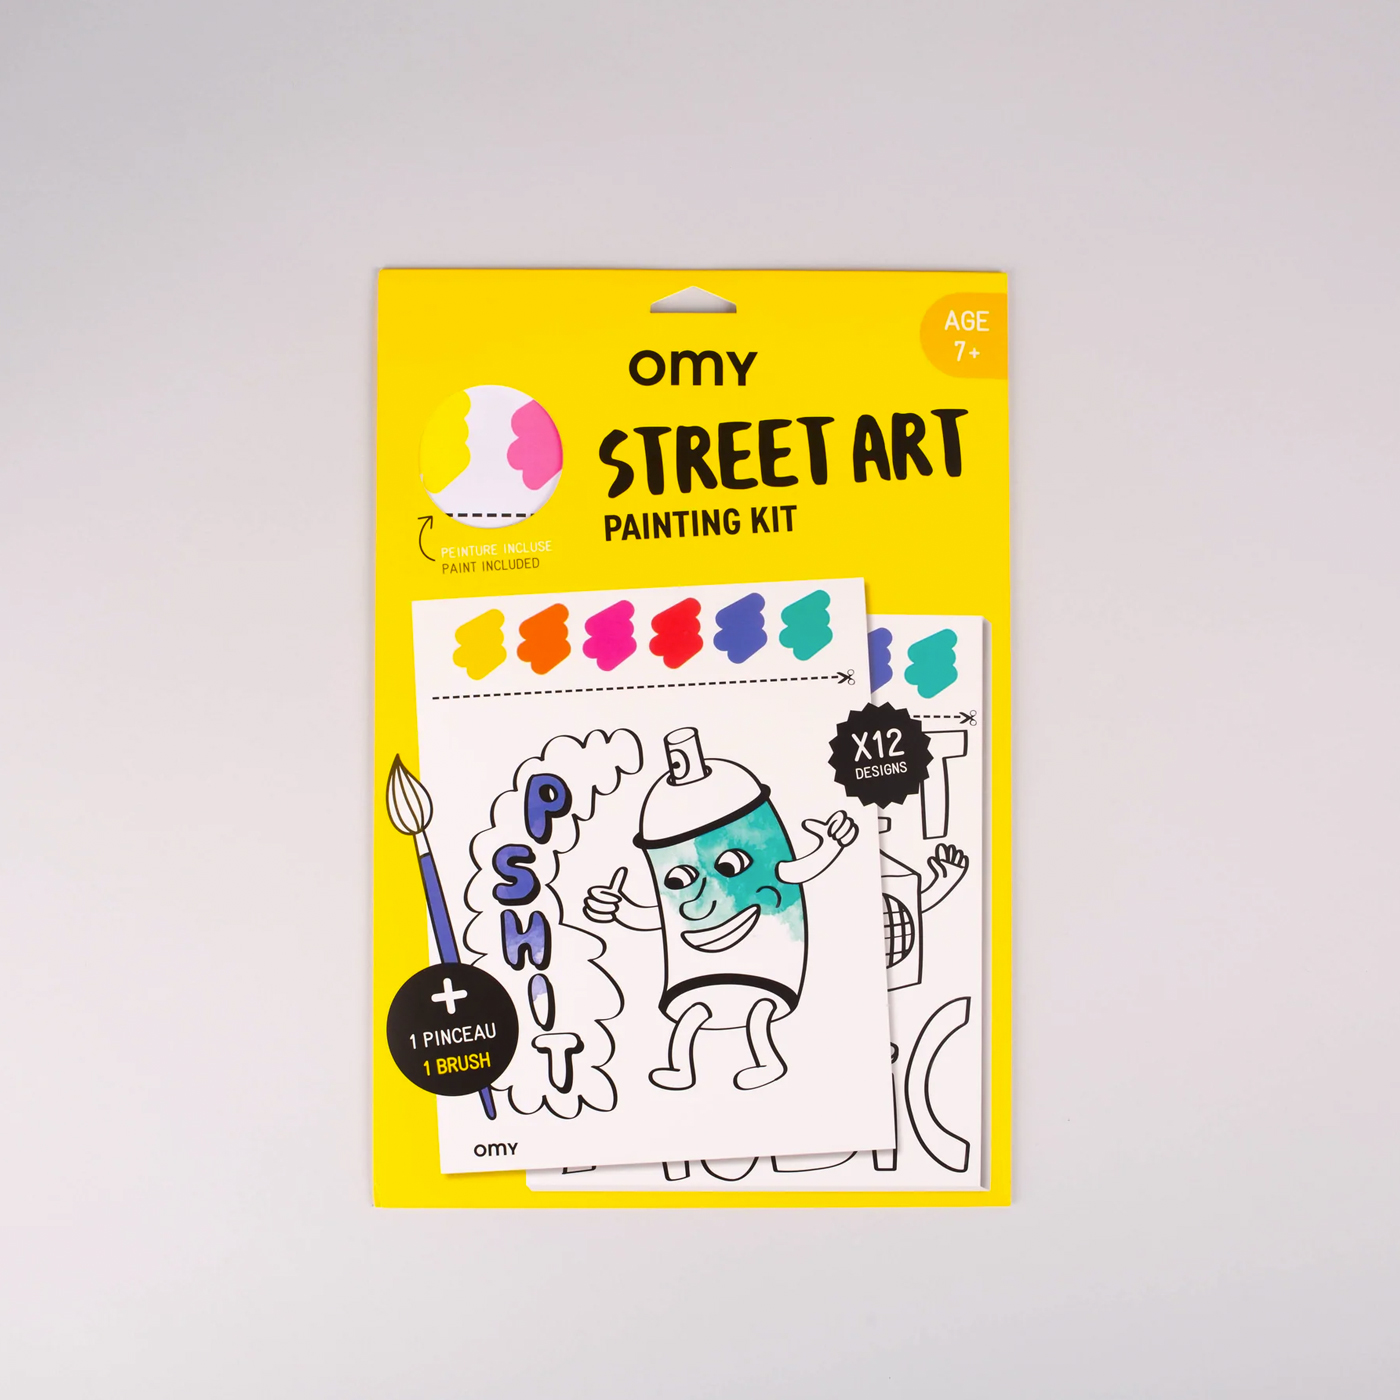  Omy Painting Kit  | Street Art